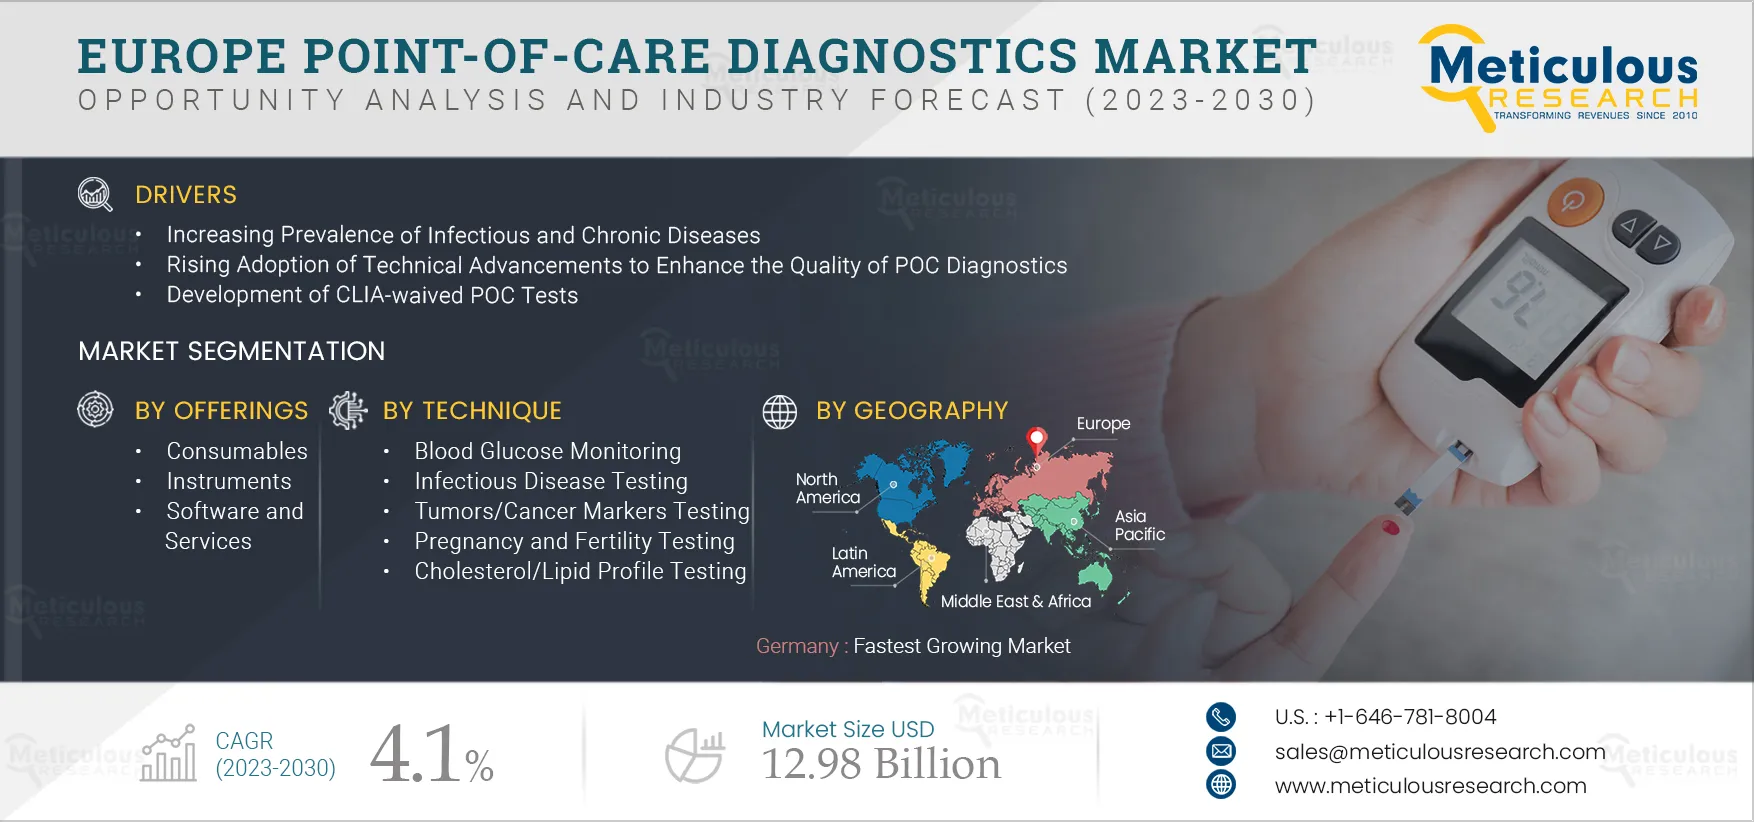 Europe Point-of-Care Diagnostics Market